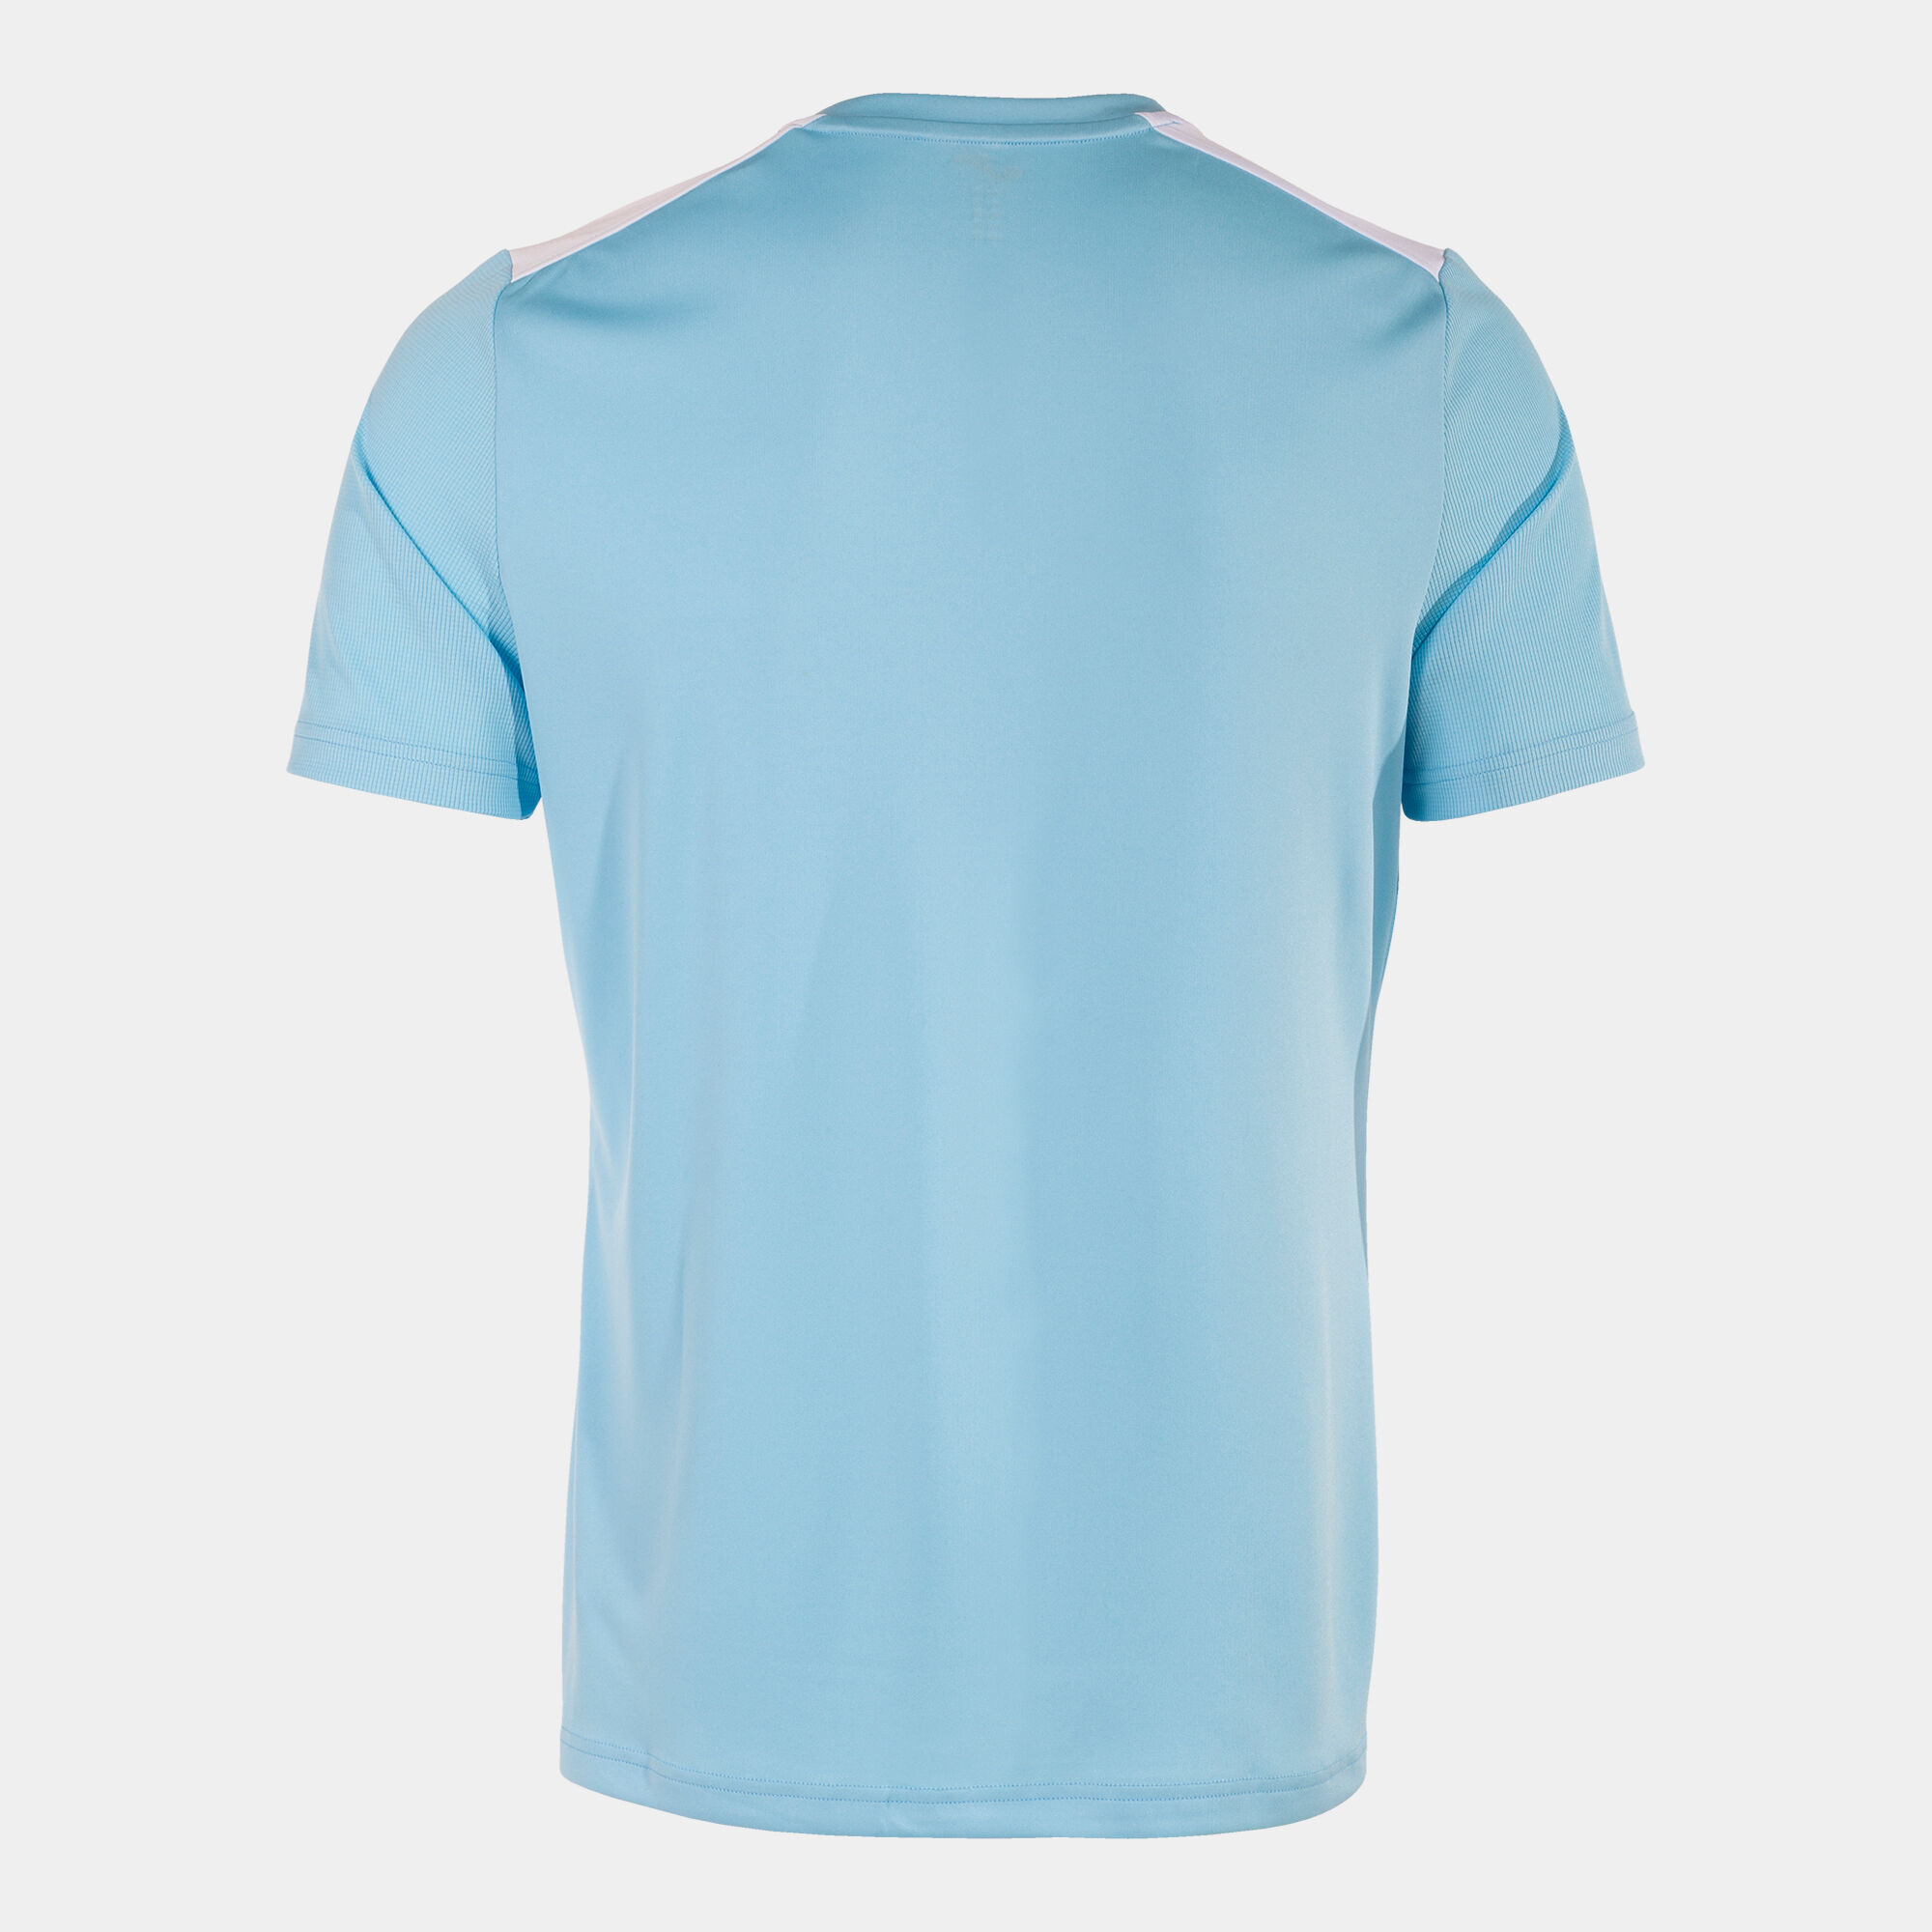 Shirt short sleeve Championship sky blue white | JOMA®